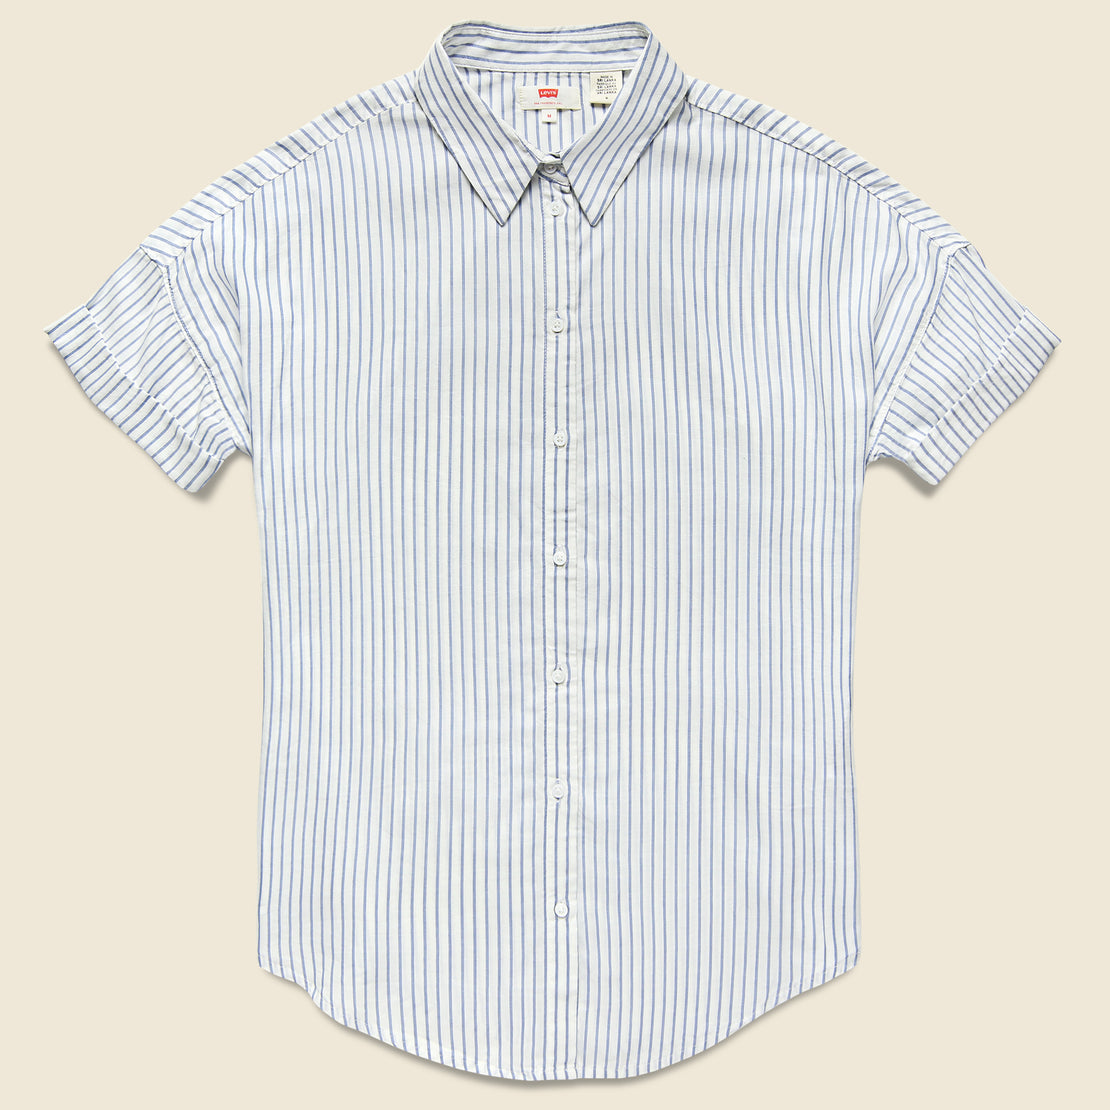 Levis Premium Harper Shirt - Colony Blue Stripe